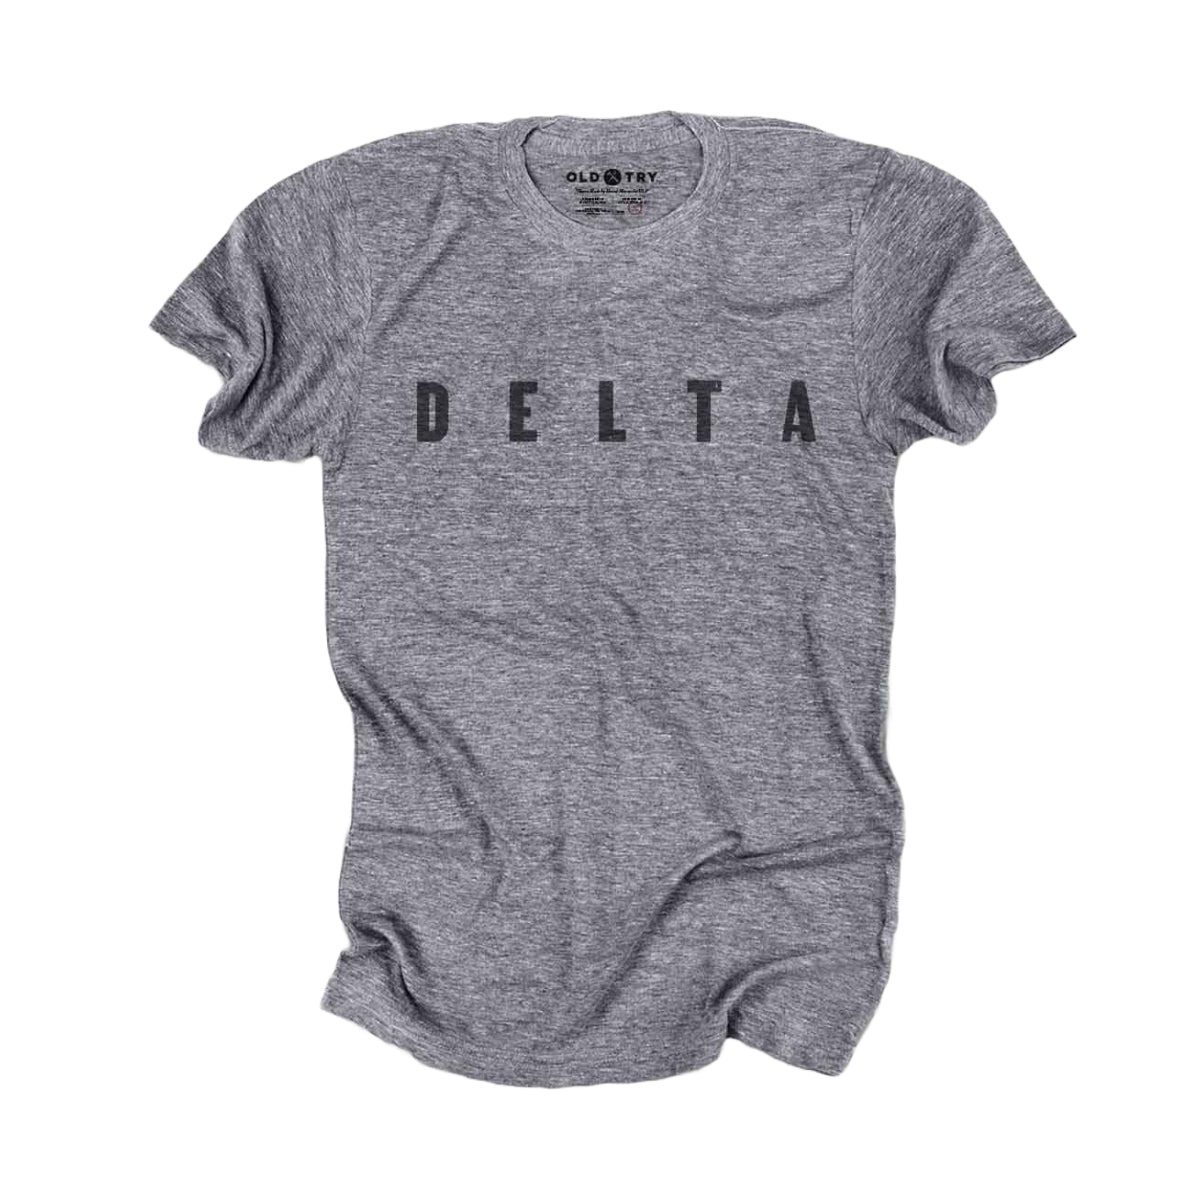 Delta Tee | Gray